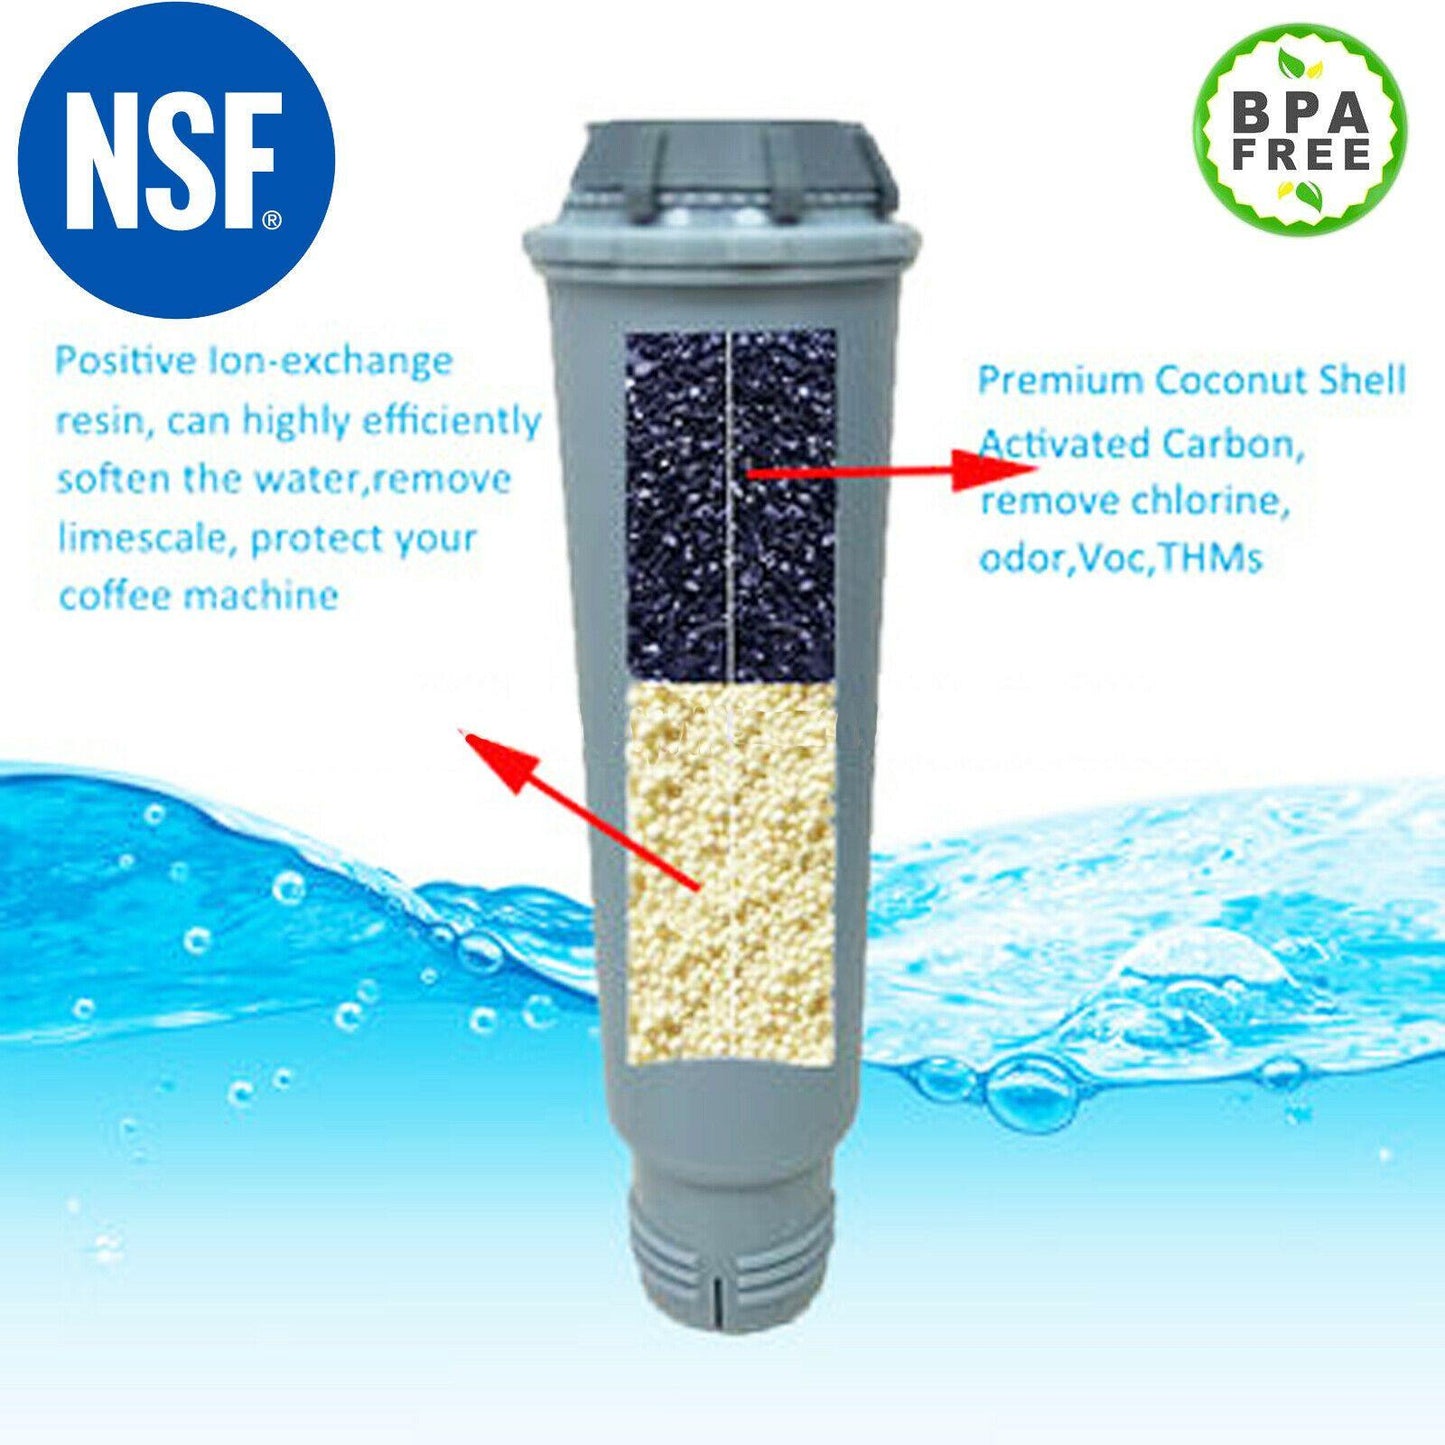 Coffee Machine Water filter for Krups Claris F088 Melitta Pro AU Sparesbarn